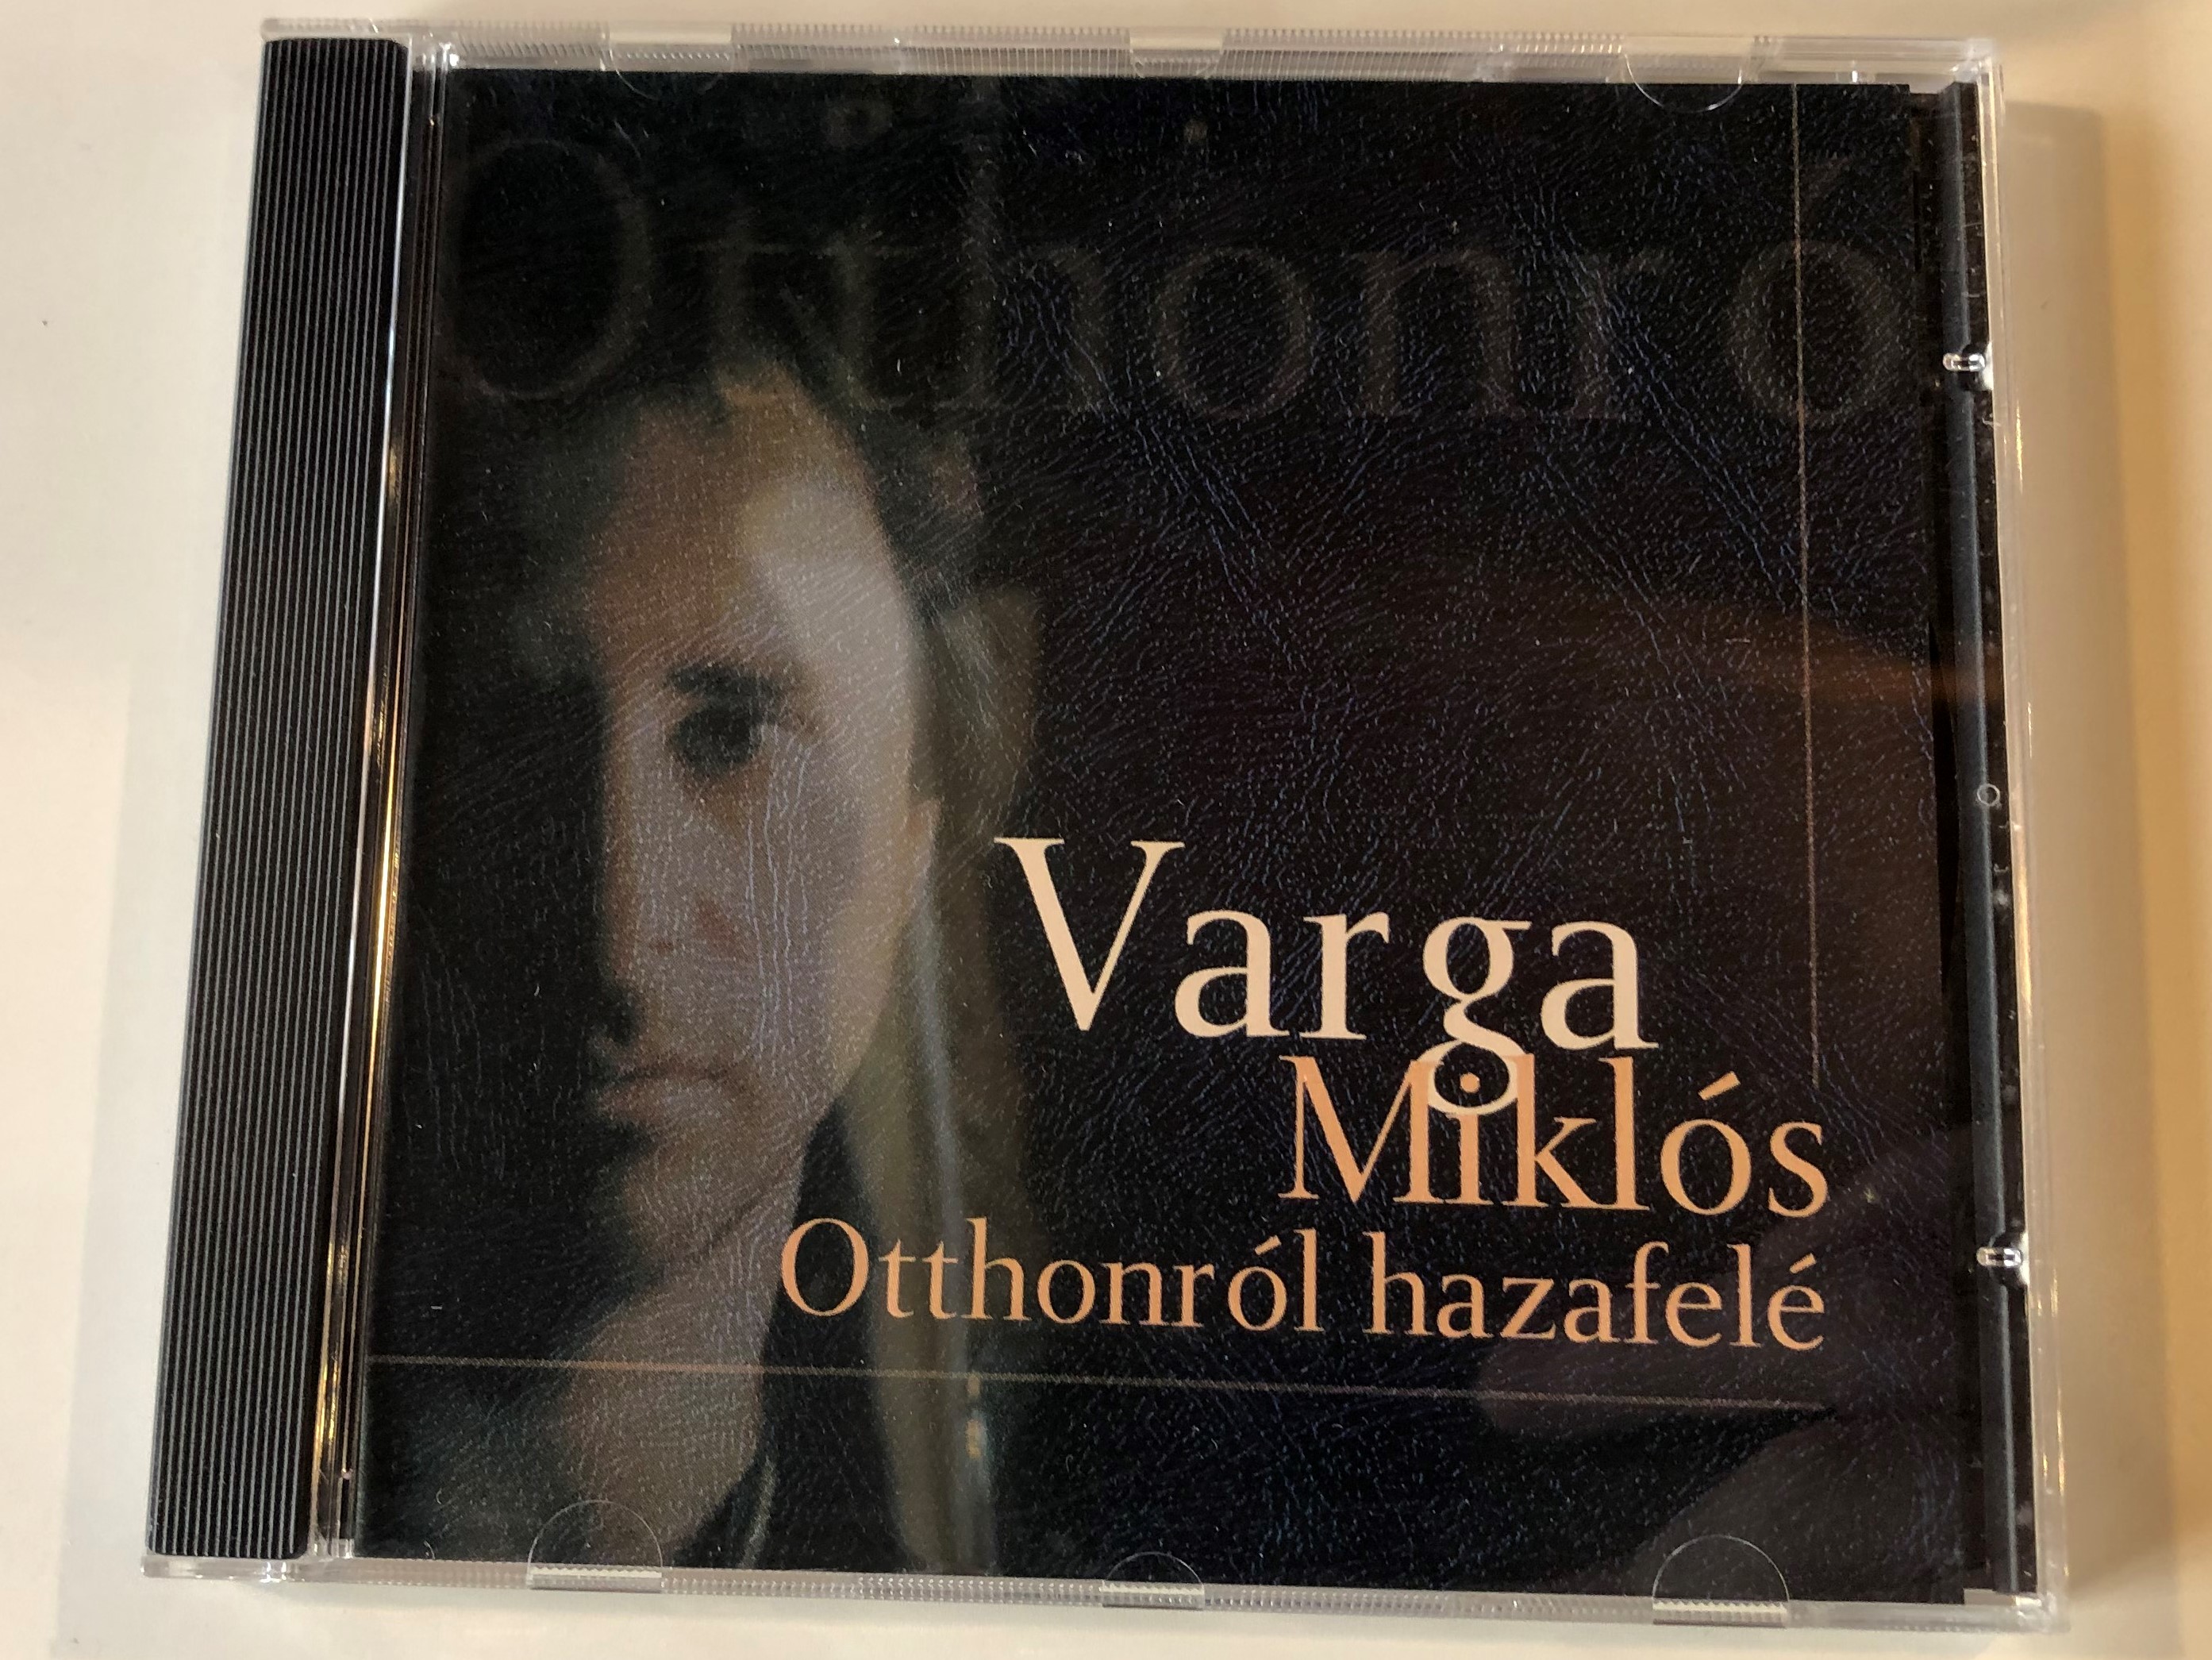 varga-mikl-s-otthonr-l-hazafel-exkluziv-music-kiad-audio-cd-emk-027-1-.jpg